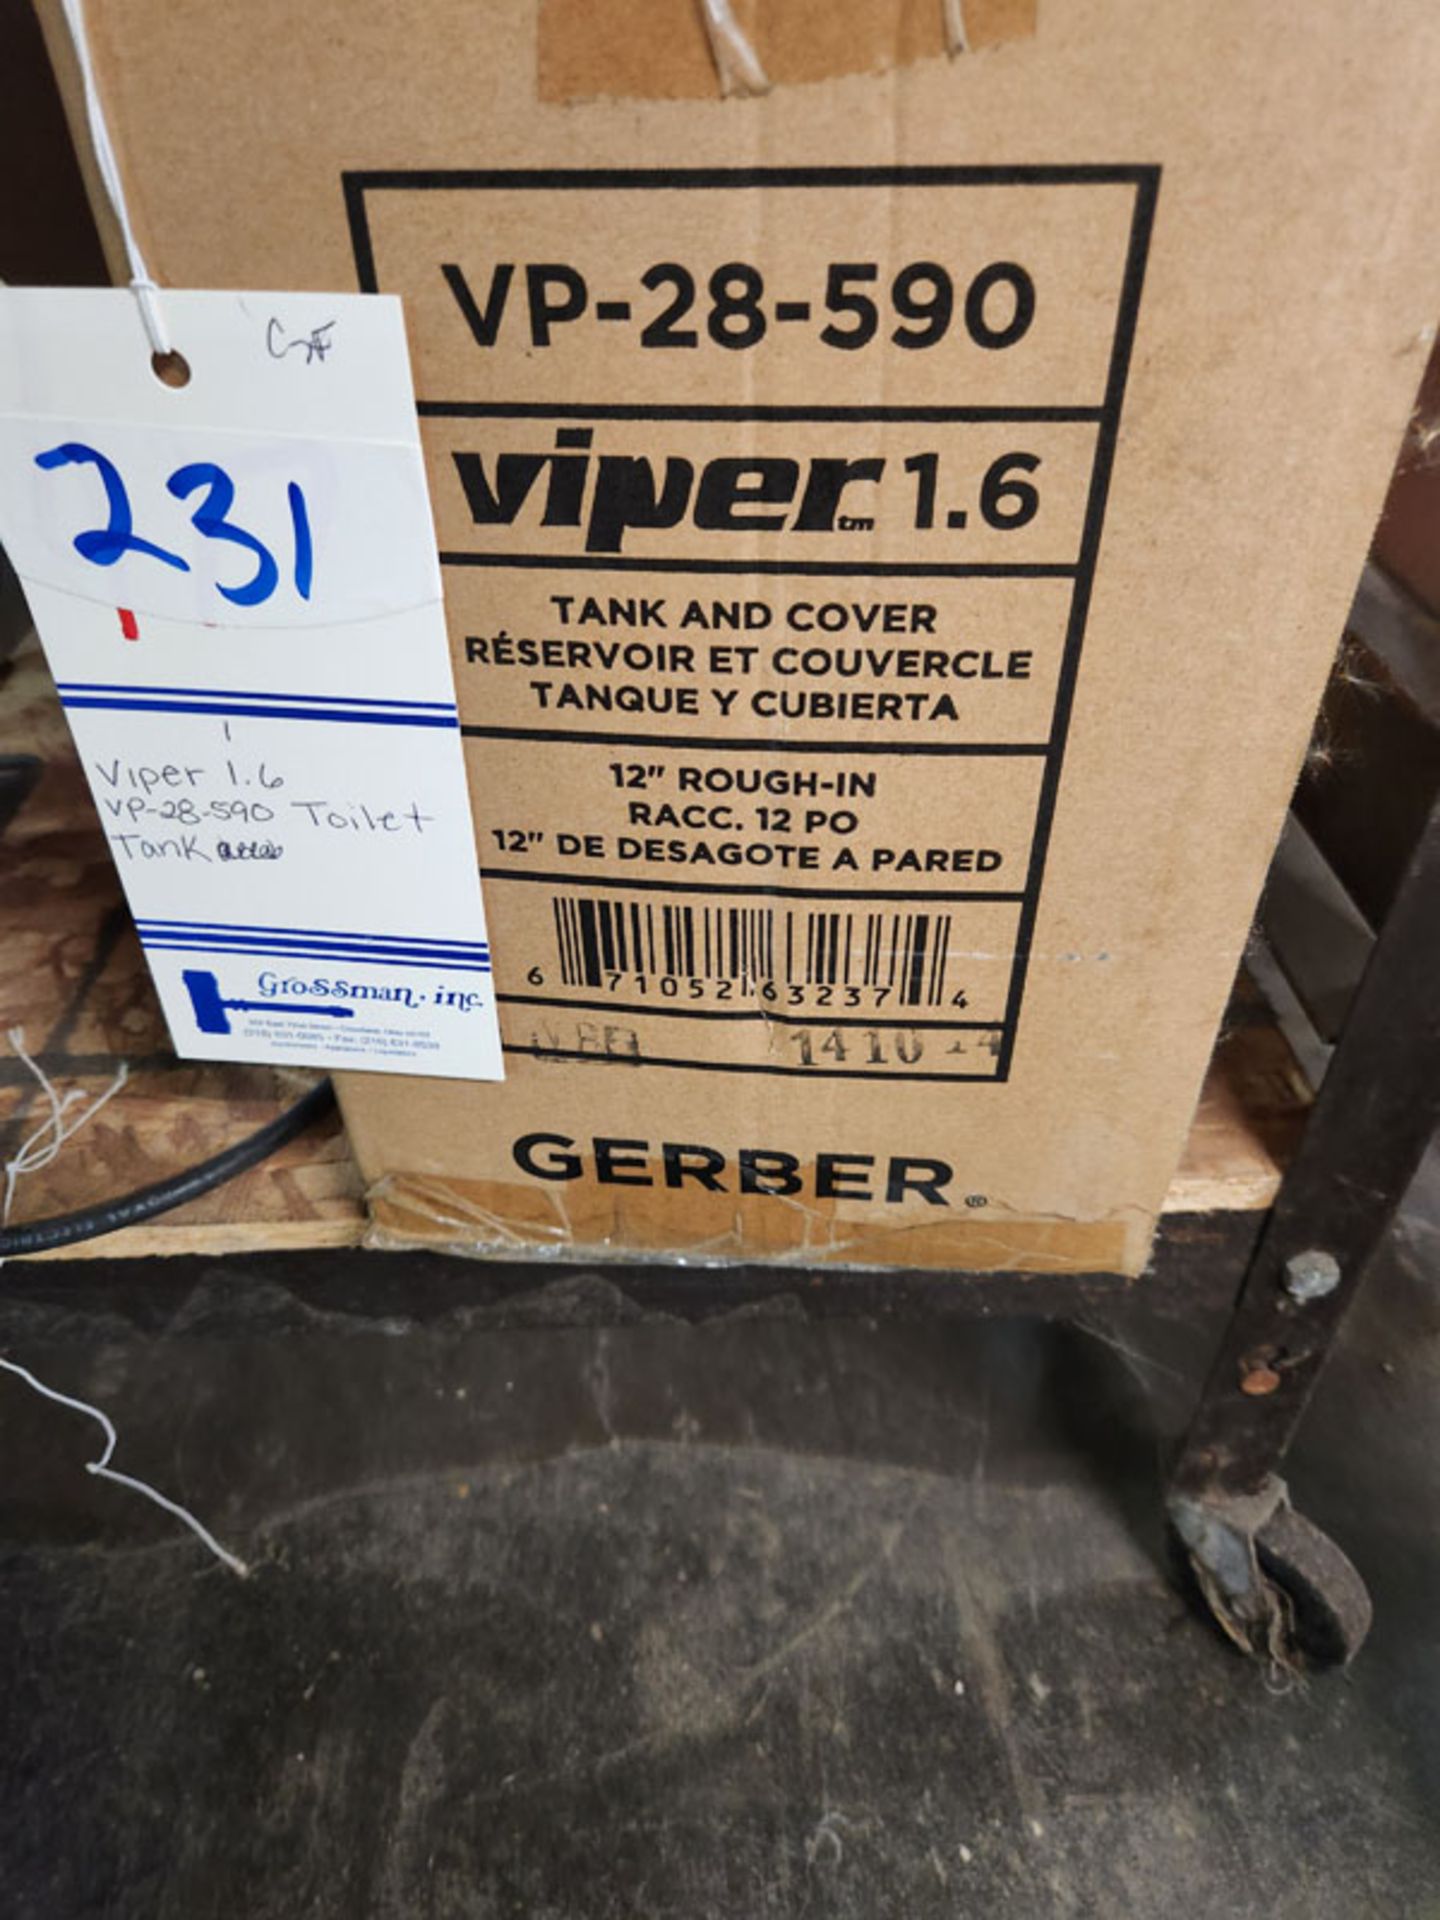 NEW TOILET TANK - VIPER 1.6 VP-28-590 - Image 2 of 4